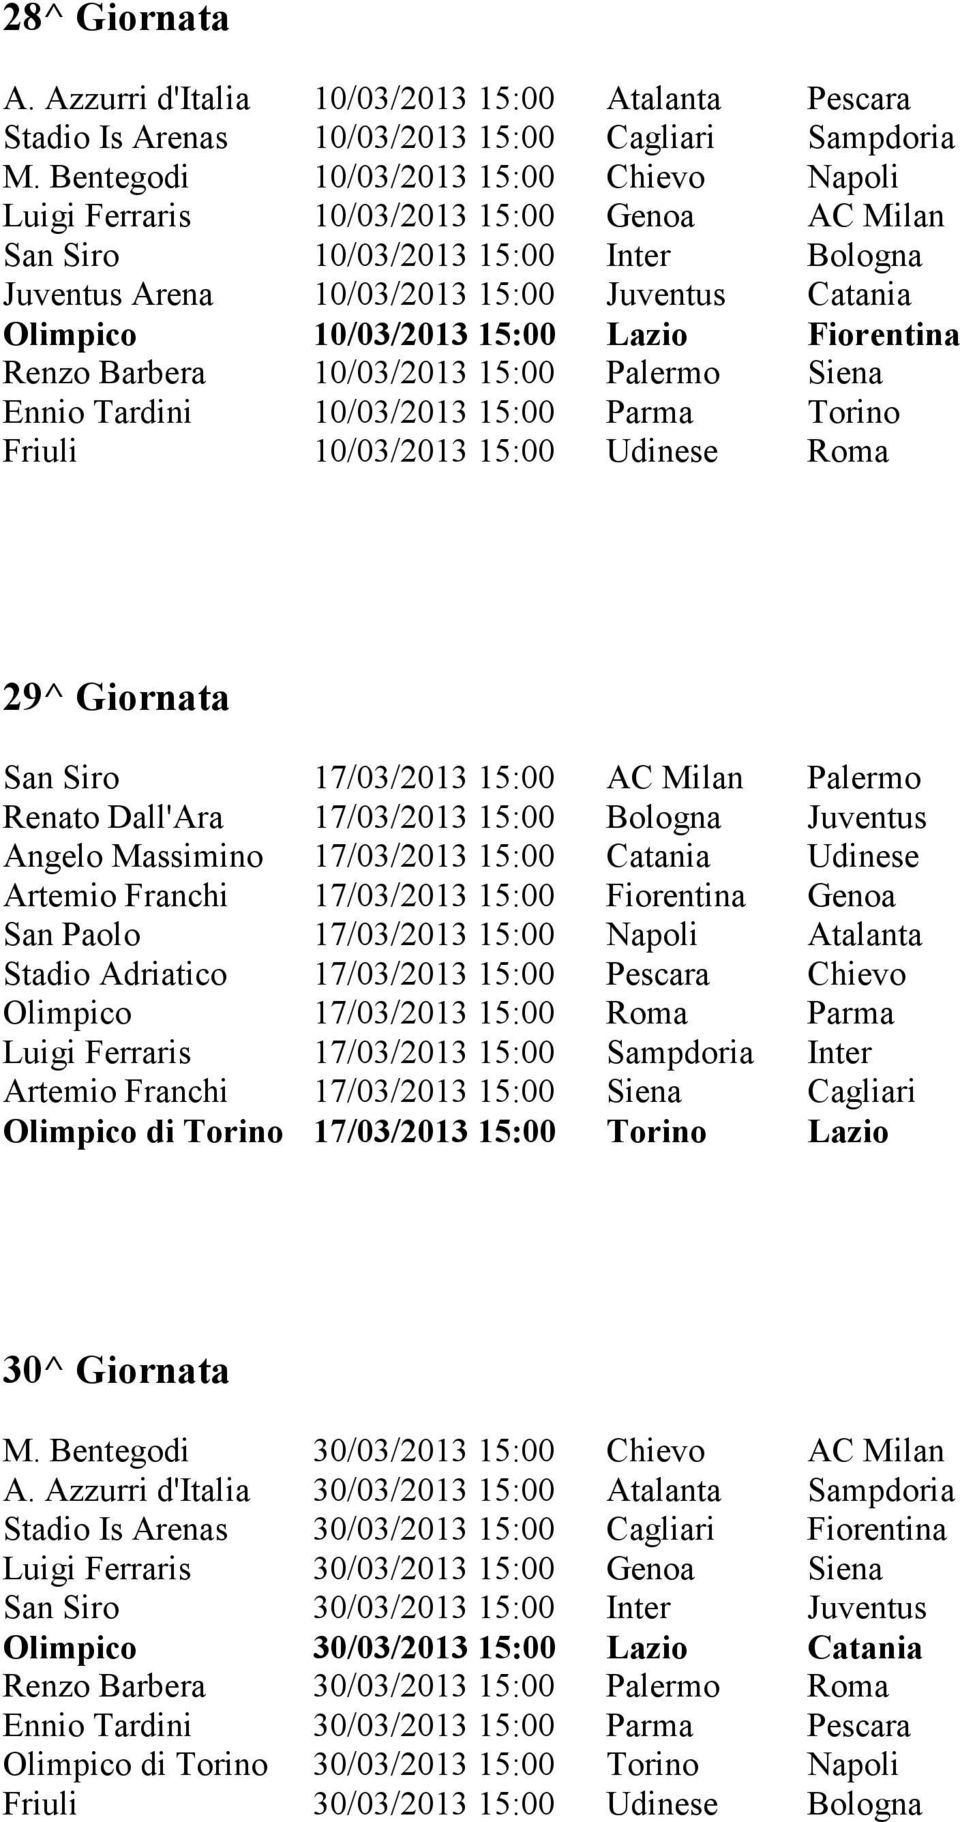 15:00 Lazio Fiorentina Renzo Barbera 10/03/2013 15:00 Palermo Siena Ennio Tardini 10/03/2013 15:00 Parma Torino Friuli 10/03/2013 15:00 Udinese Roma 29^ Giornata San Siro 17/03/2013 15:00 AC Milan